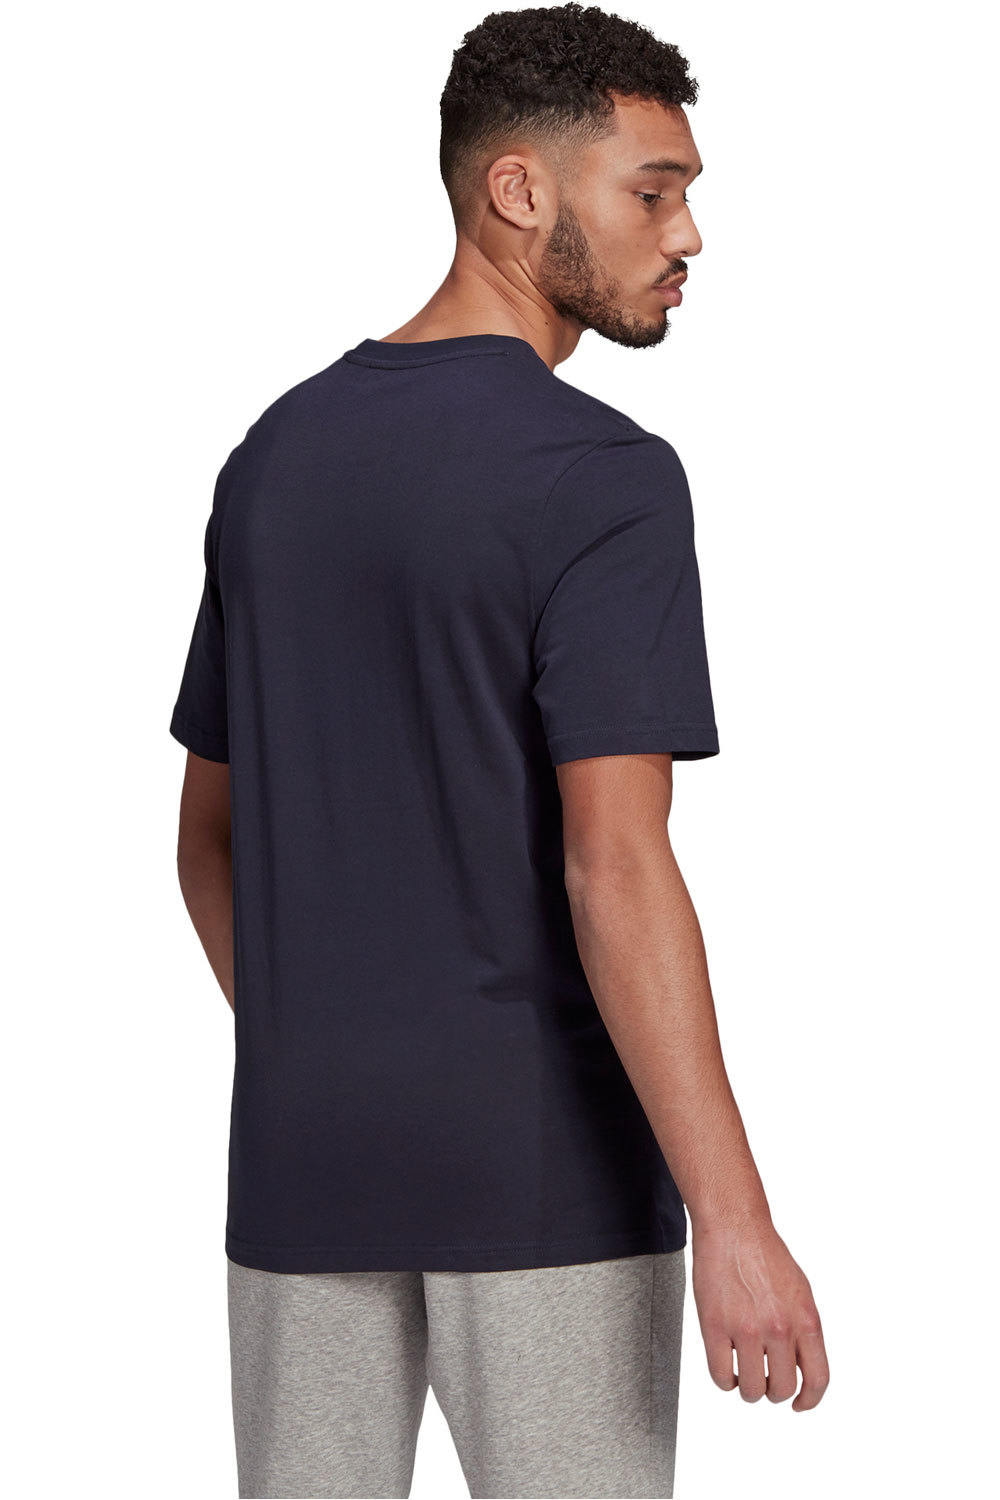 adidas camiseta manga corta hombre Essentials Embroidered Linear Logo vista trasera